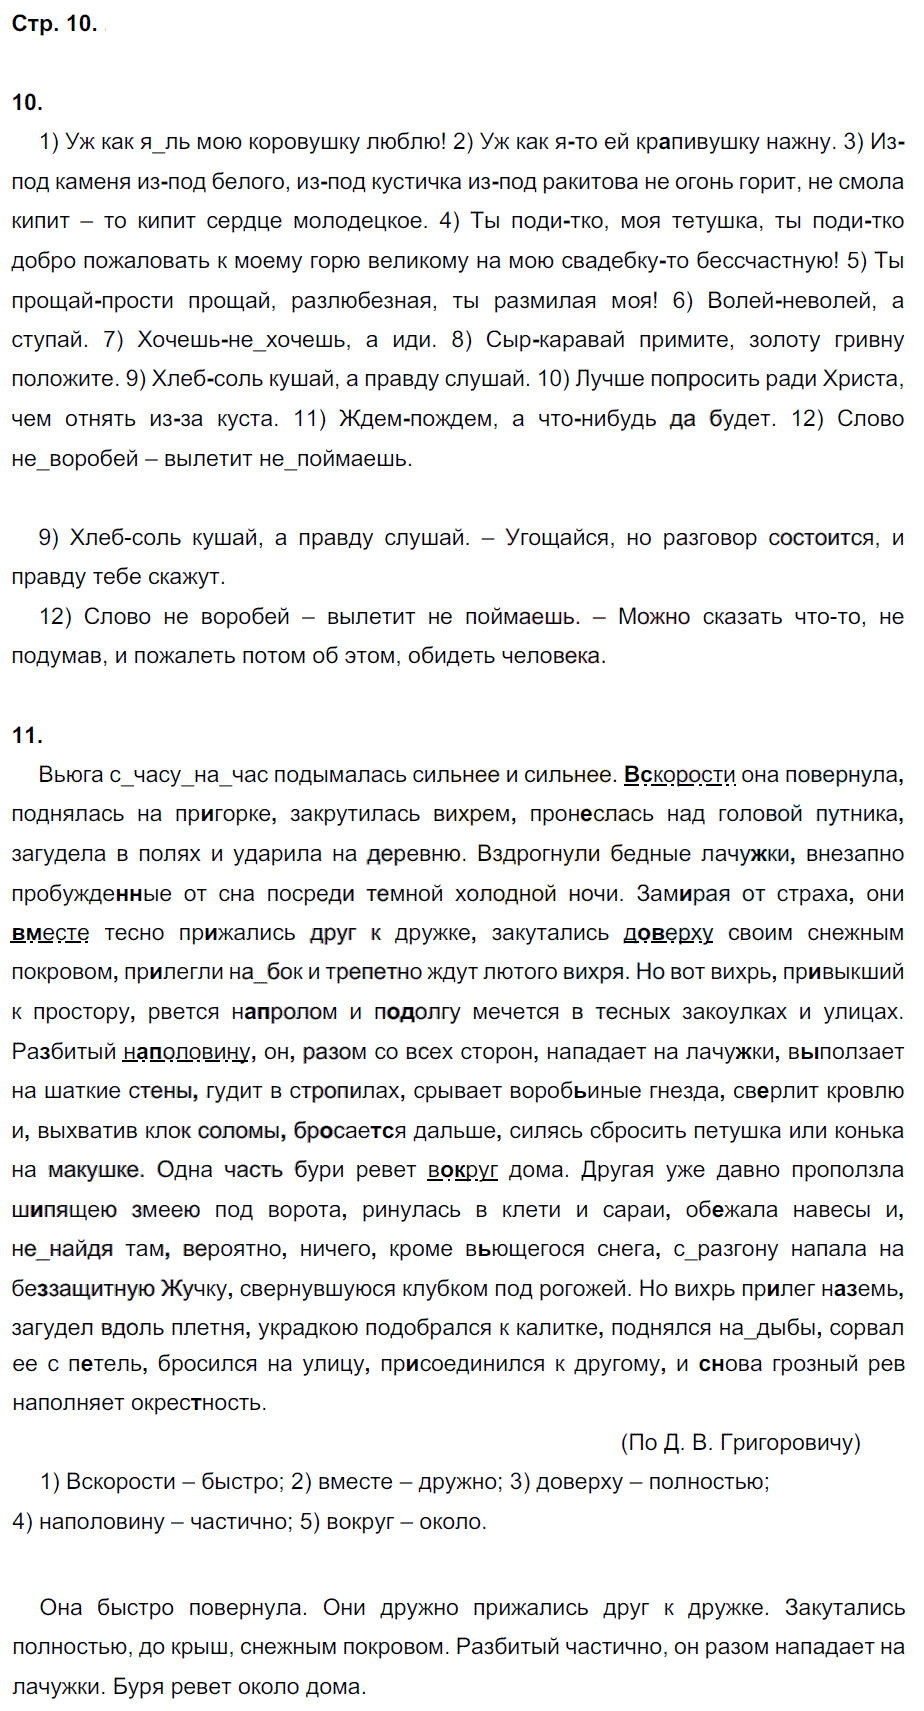 гдз 8 класс рабочая тетрадь страница 10 русский язык Кулаева